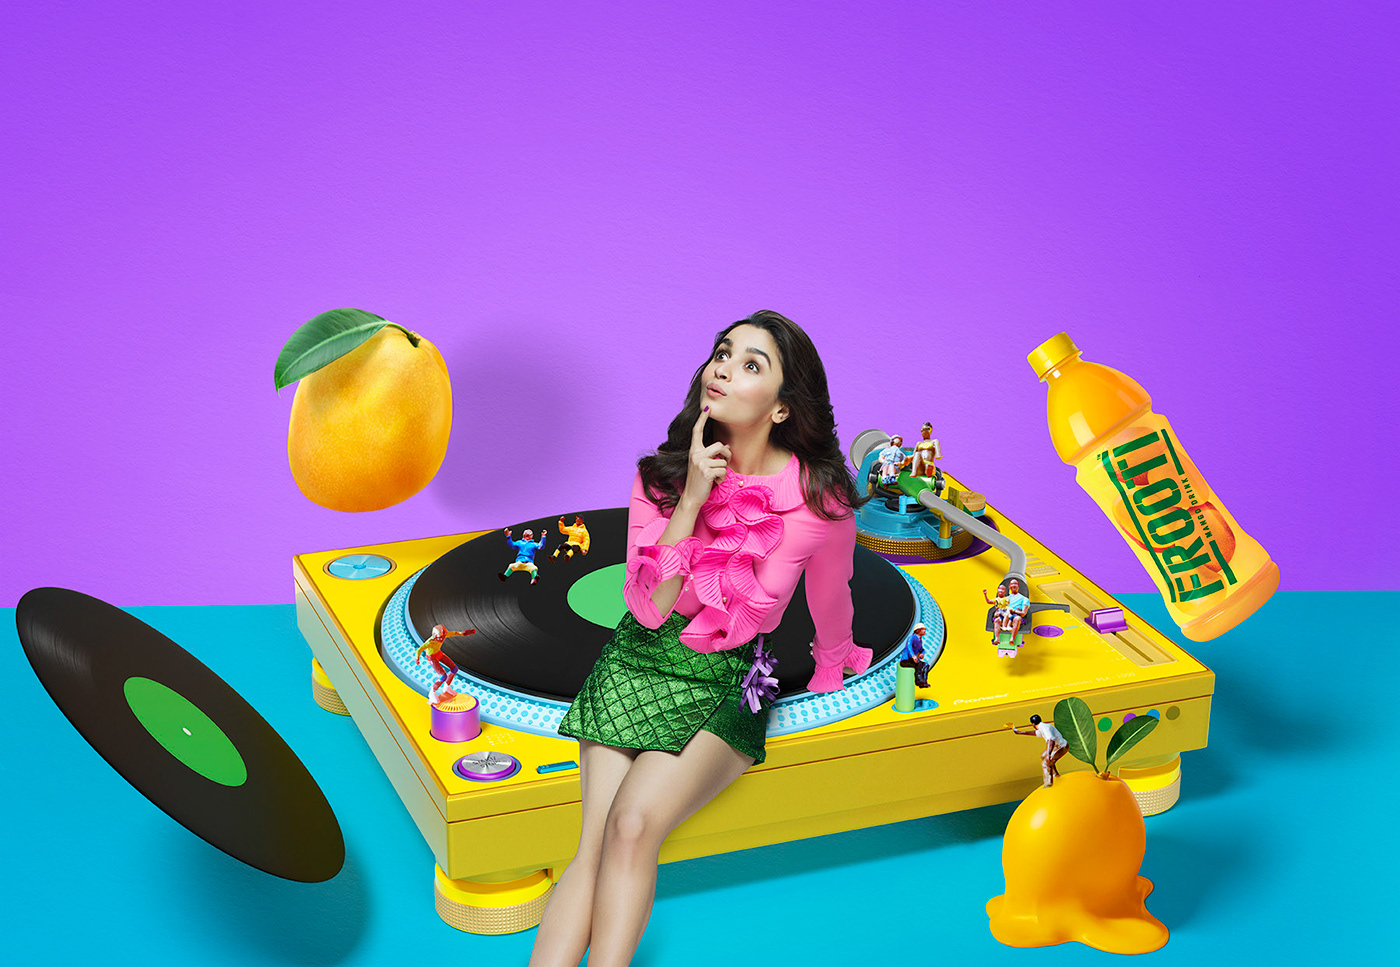 CGI vfx CG 3D Food  people colorful toys lifestyle Fashion 